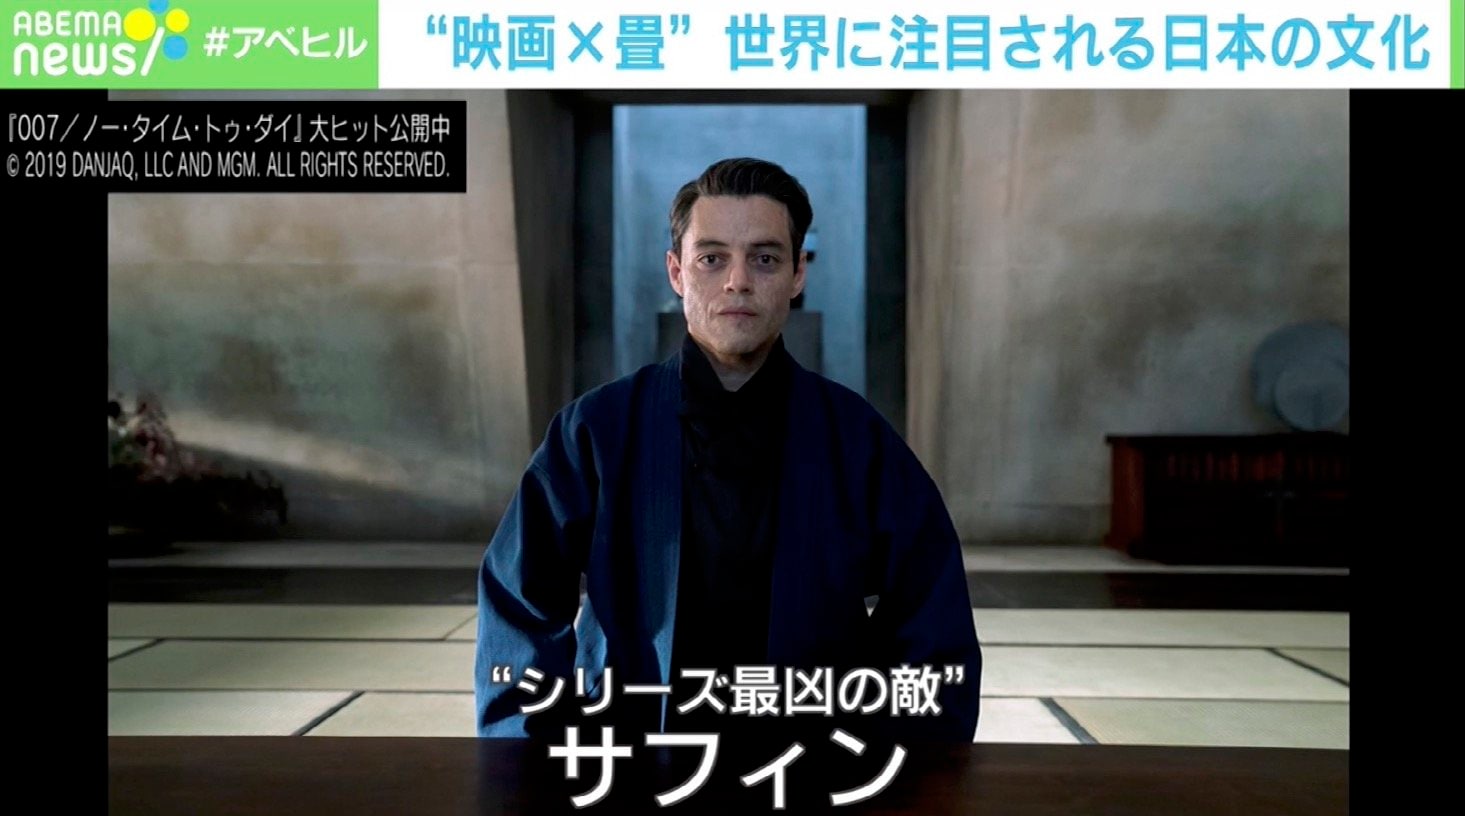 ABEMAヒルズ【平日ひる12時〜生放送】 - 最新NEWS - 日本の畳が「007」の新作に登場? (ニュース) | 無料動画・見逃し配信を見るなら | ABEMA